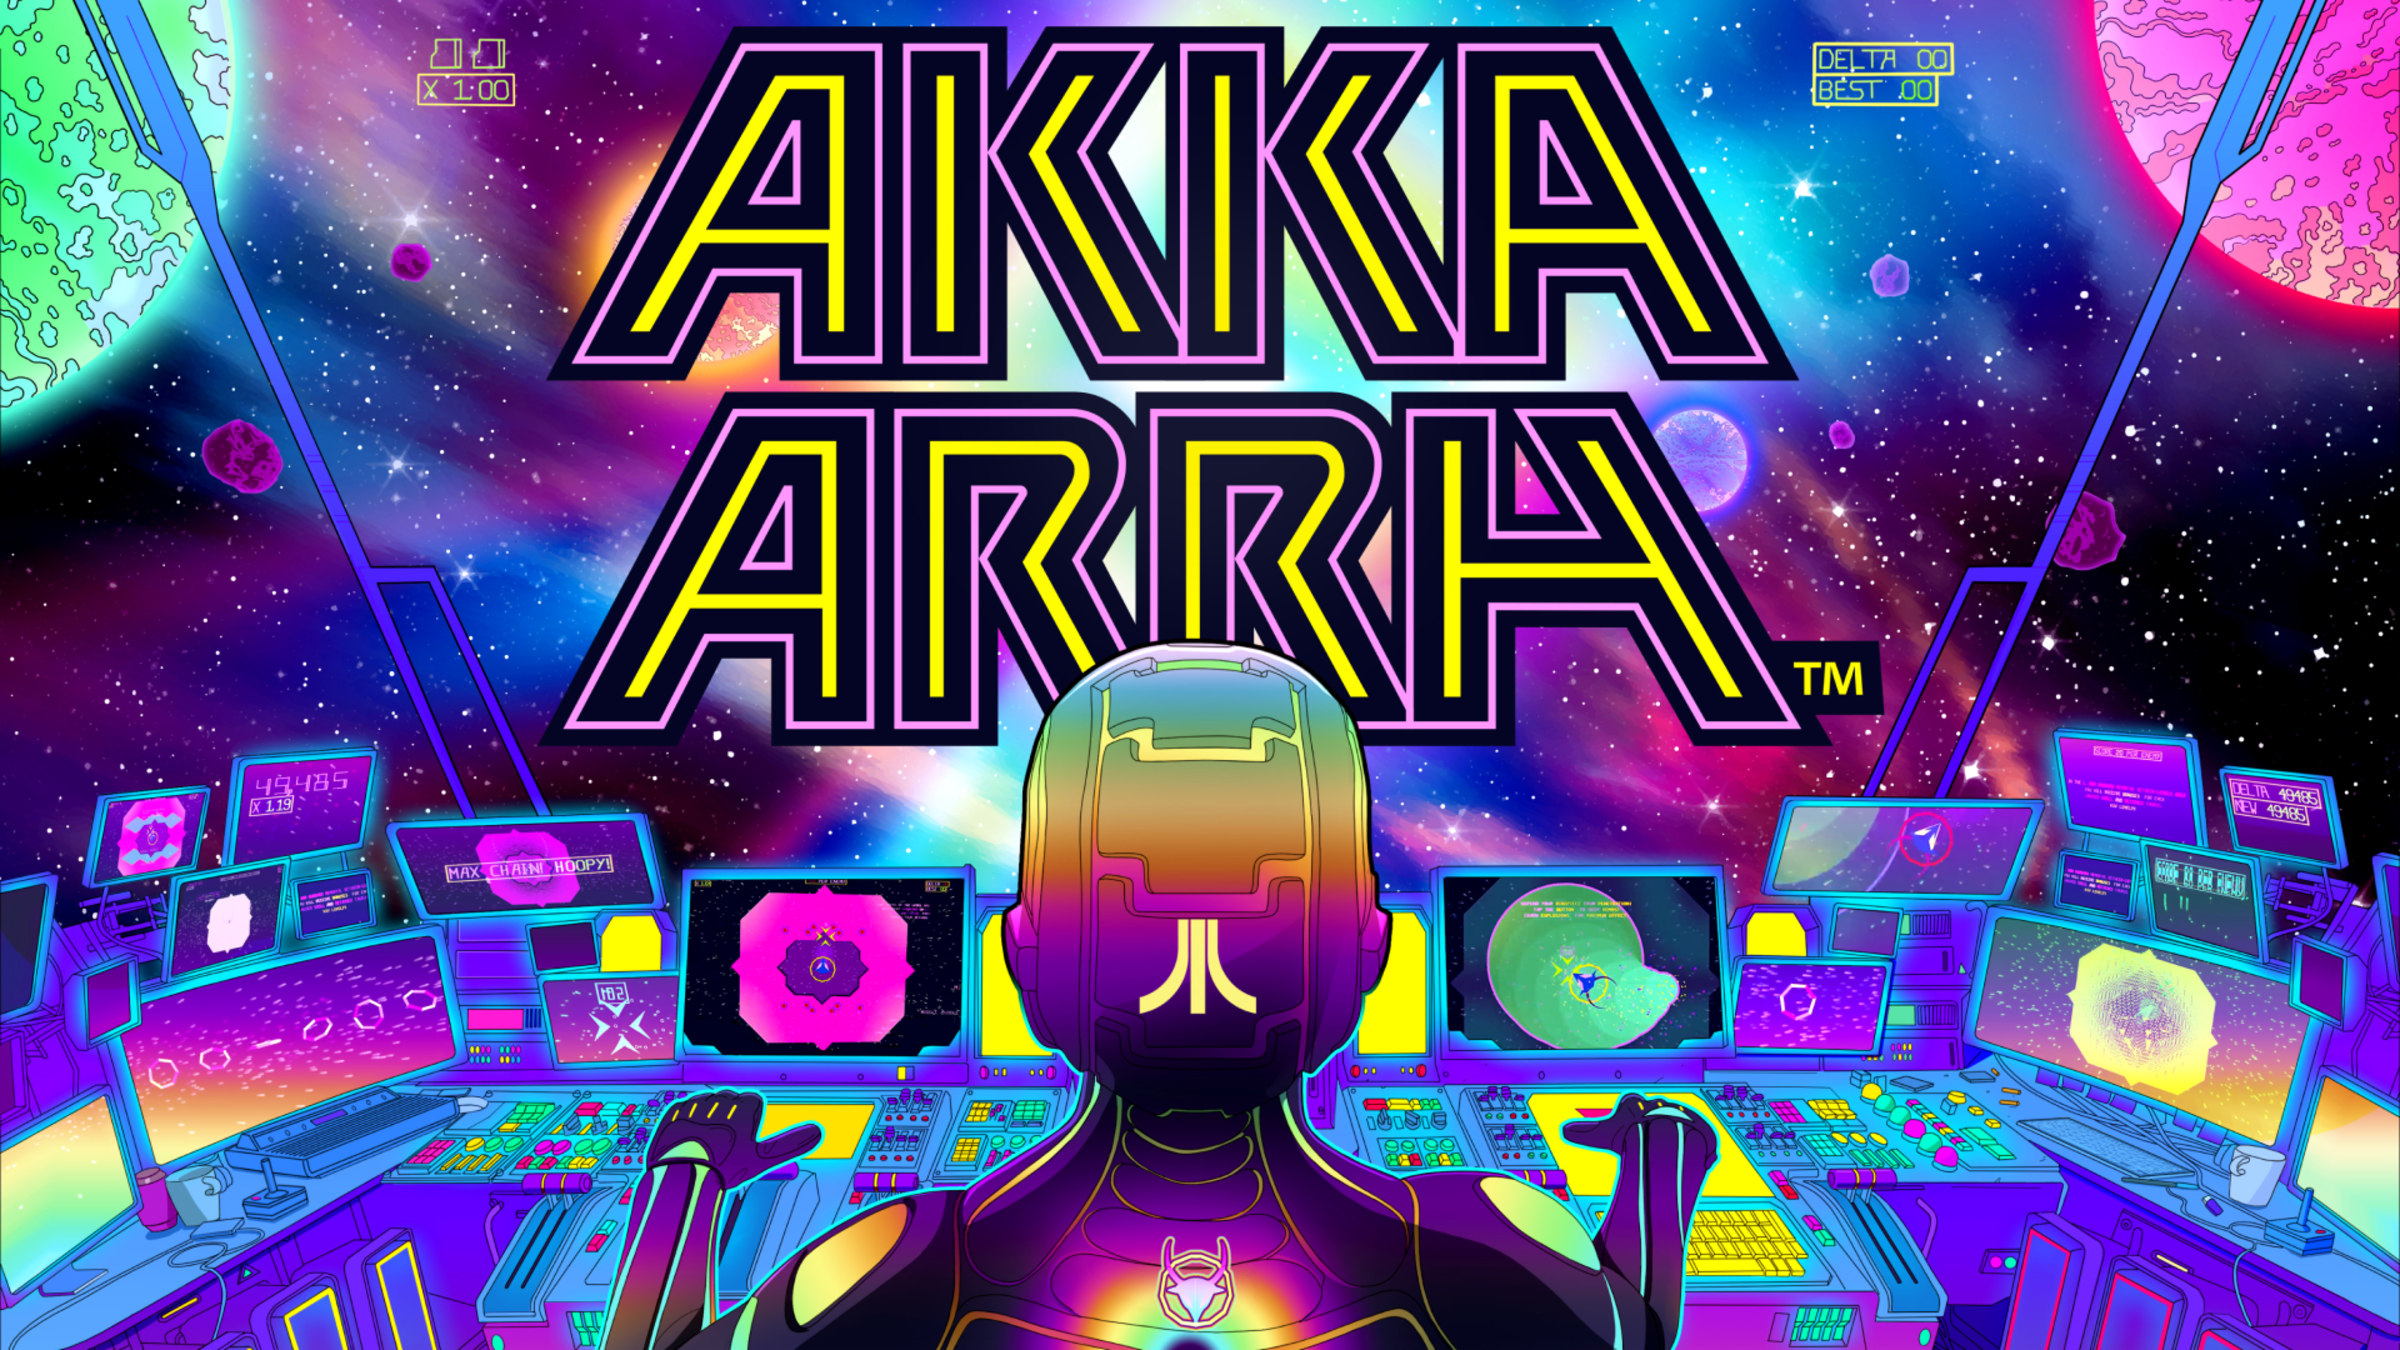 Akka Arrh Mobile iPhone iOS macOS Version Full Game Setup Free Download